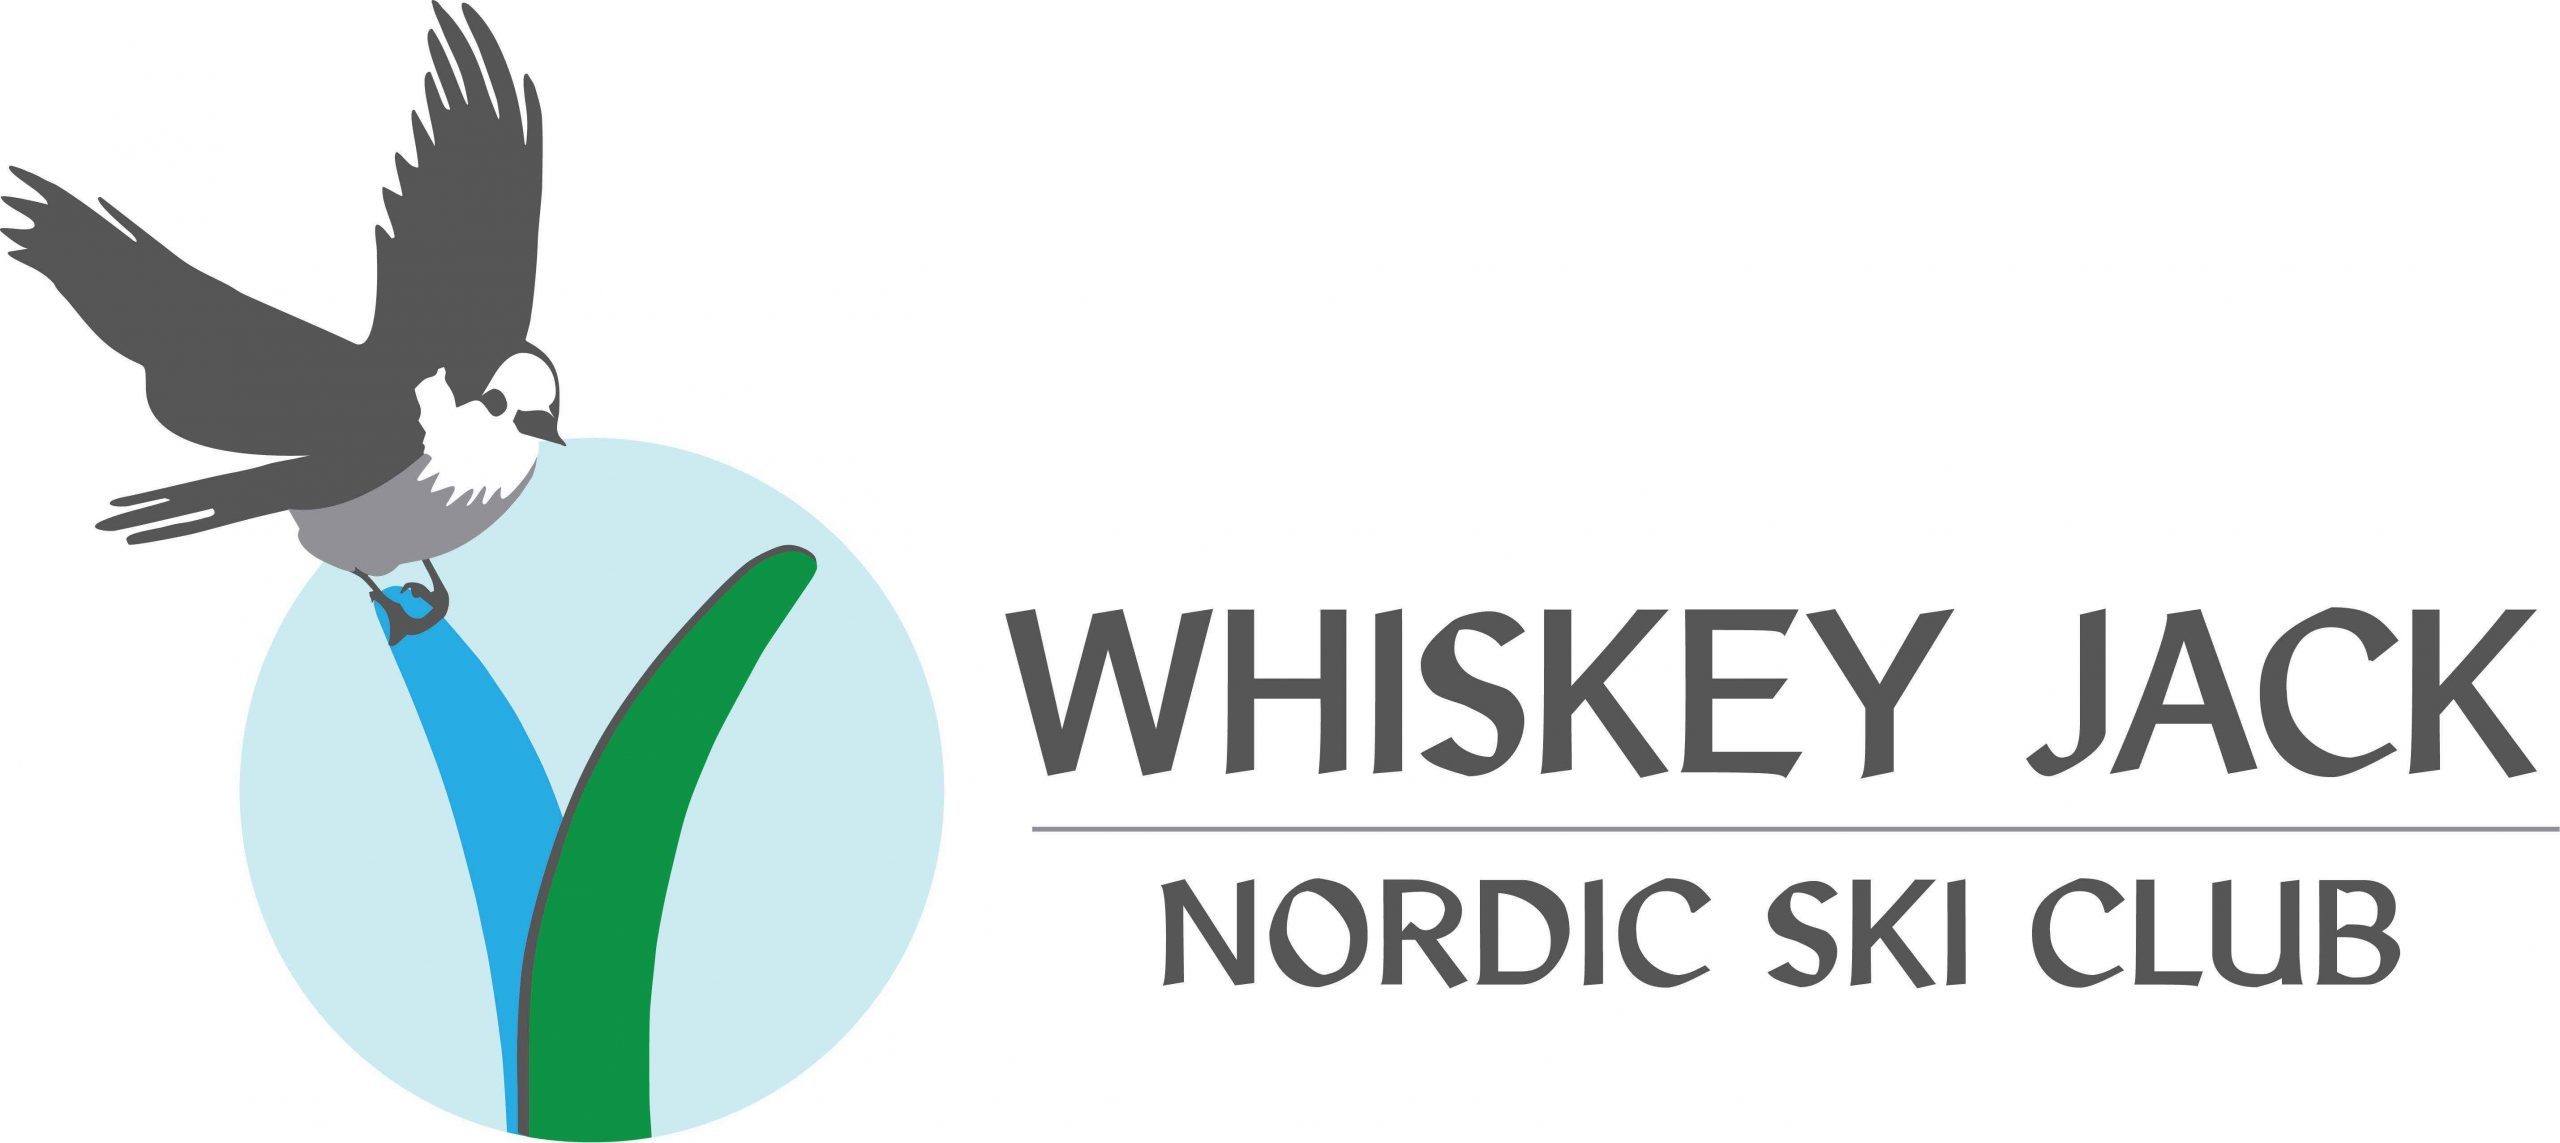 Whiskey Jack Nordic